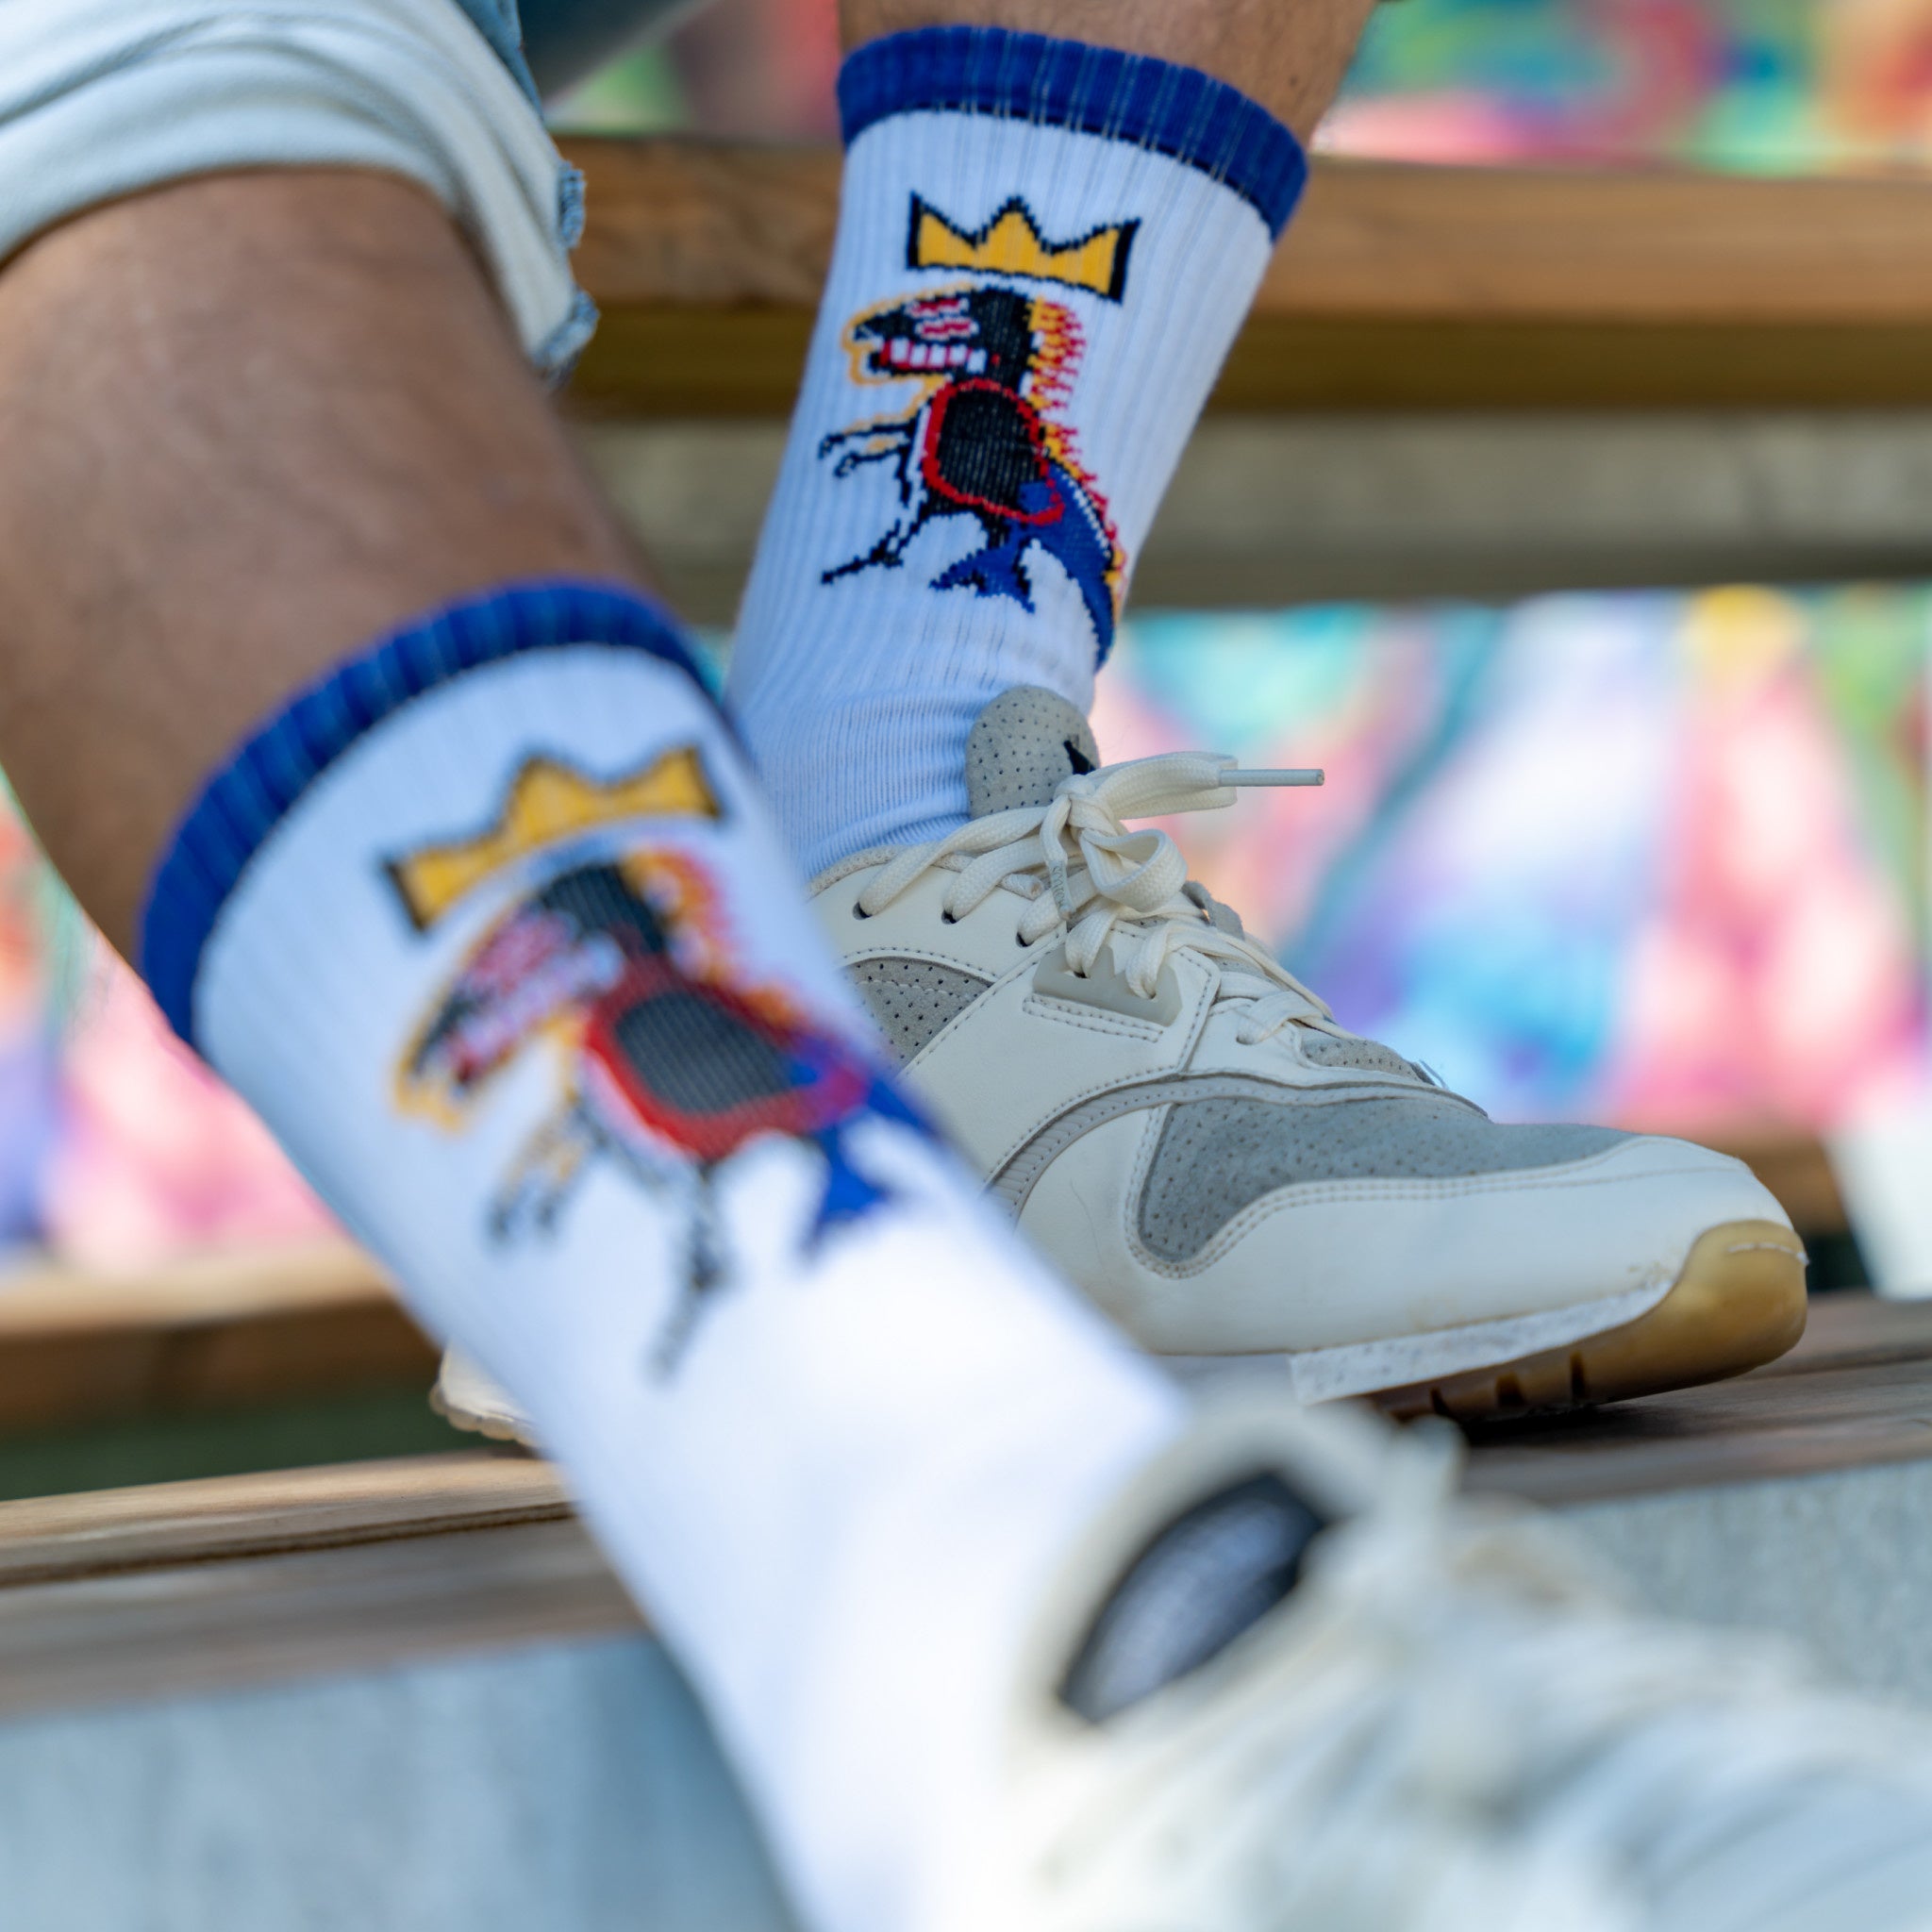 Basquiat PEZ DISPENSER Crew Socks - Wynwood Walls Shop